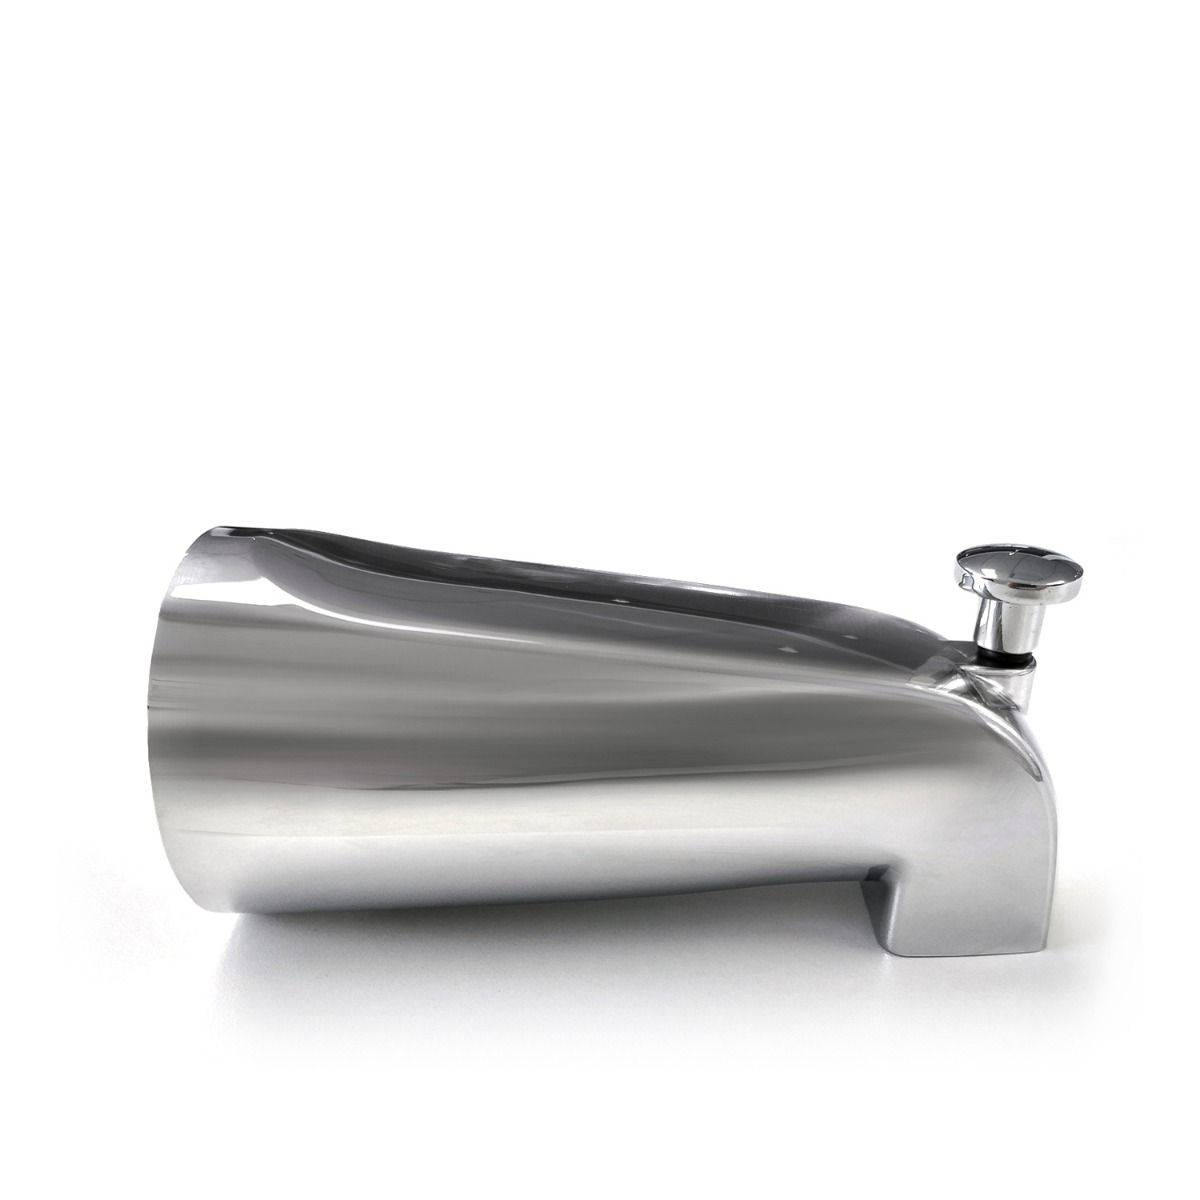 Kalia 5.25" Bath Tub Spout With Diverter for Handshower - Chrome